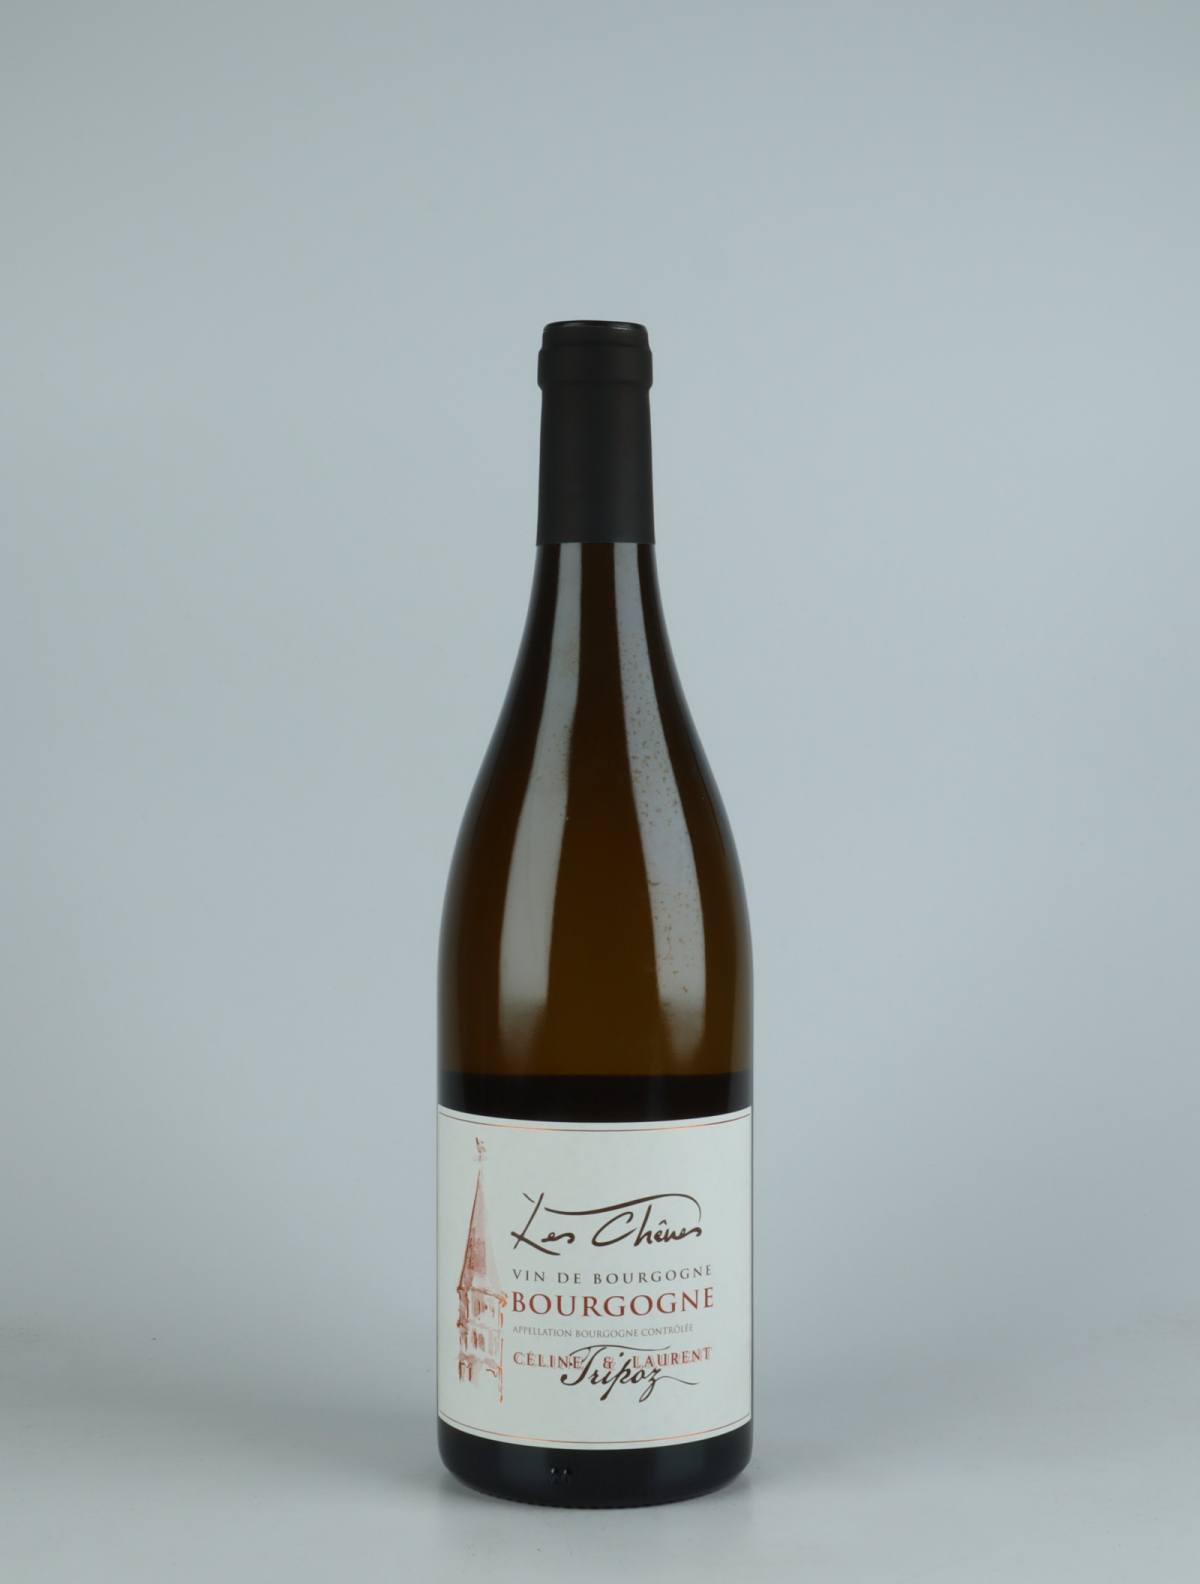 A bottle 2020 Bourgogne Blanc - Les Chênes White wine from Céline & Laurent Tripoz, Burgundy in France